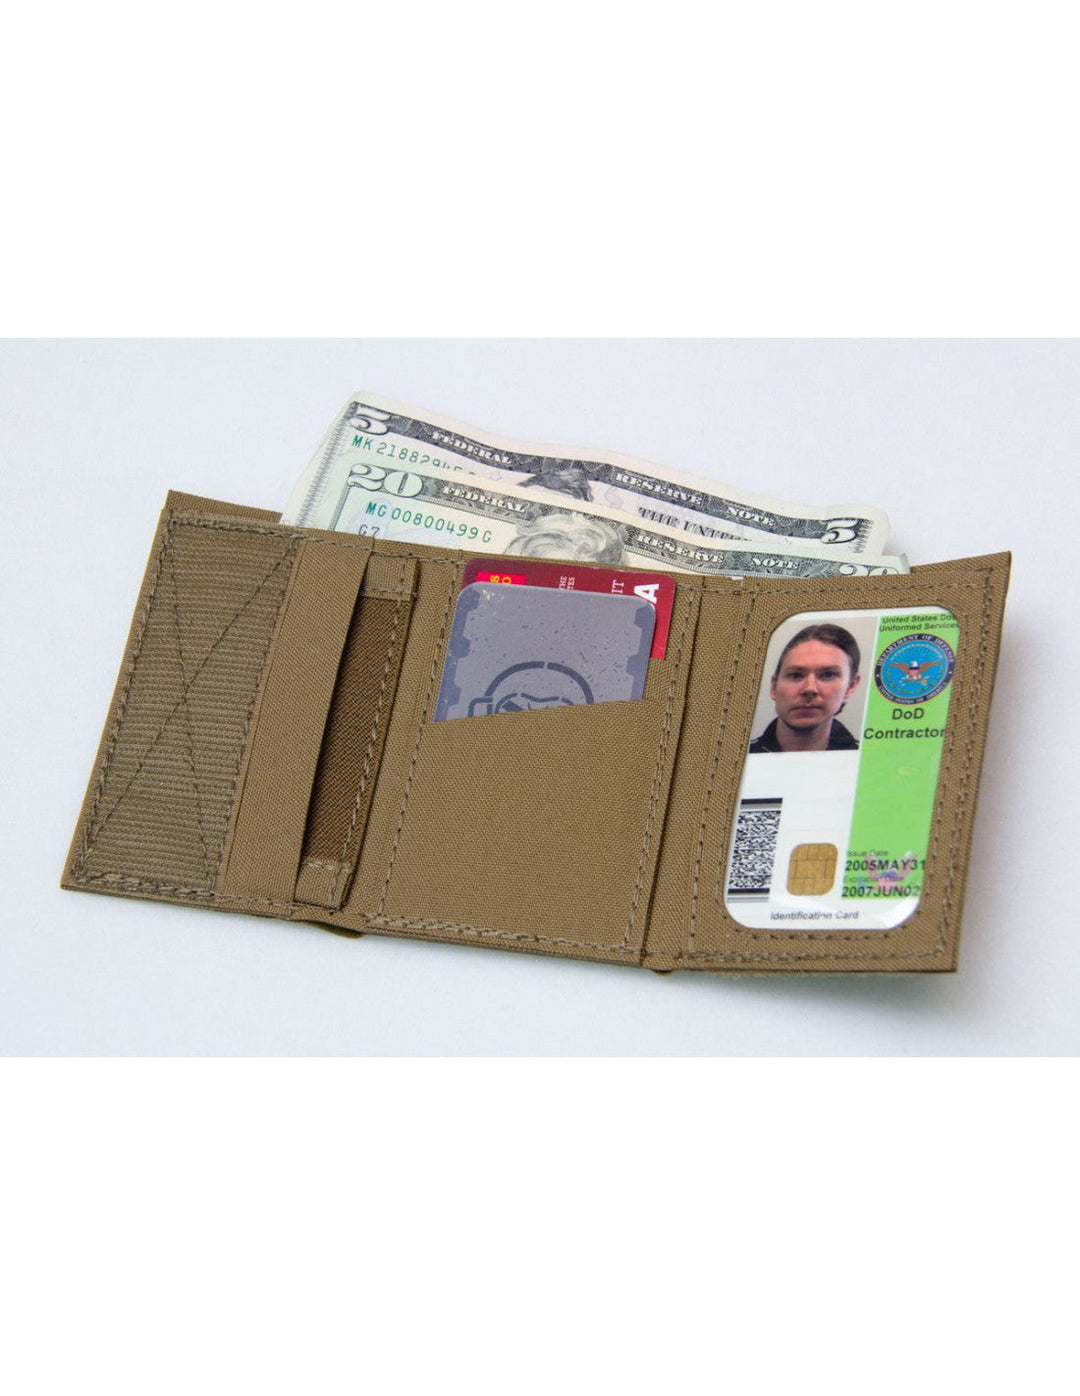 Supplies - EDC - Wallets - Mil-Spec Monkey Practical Results Wallet Lasercut